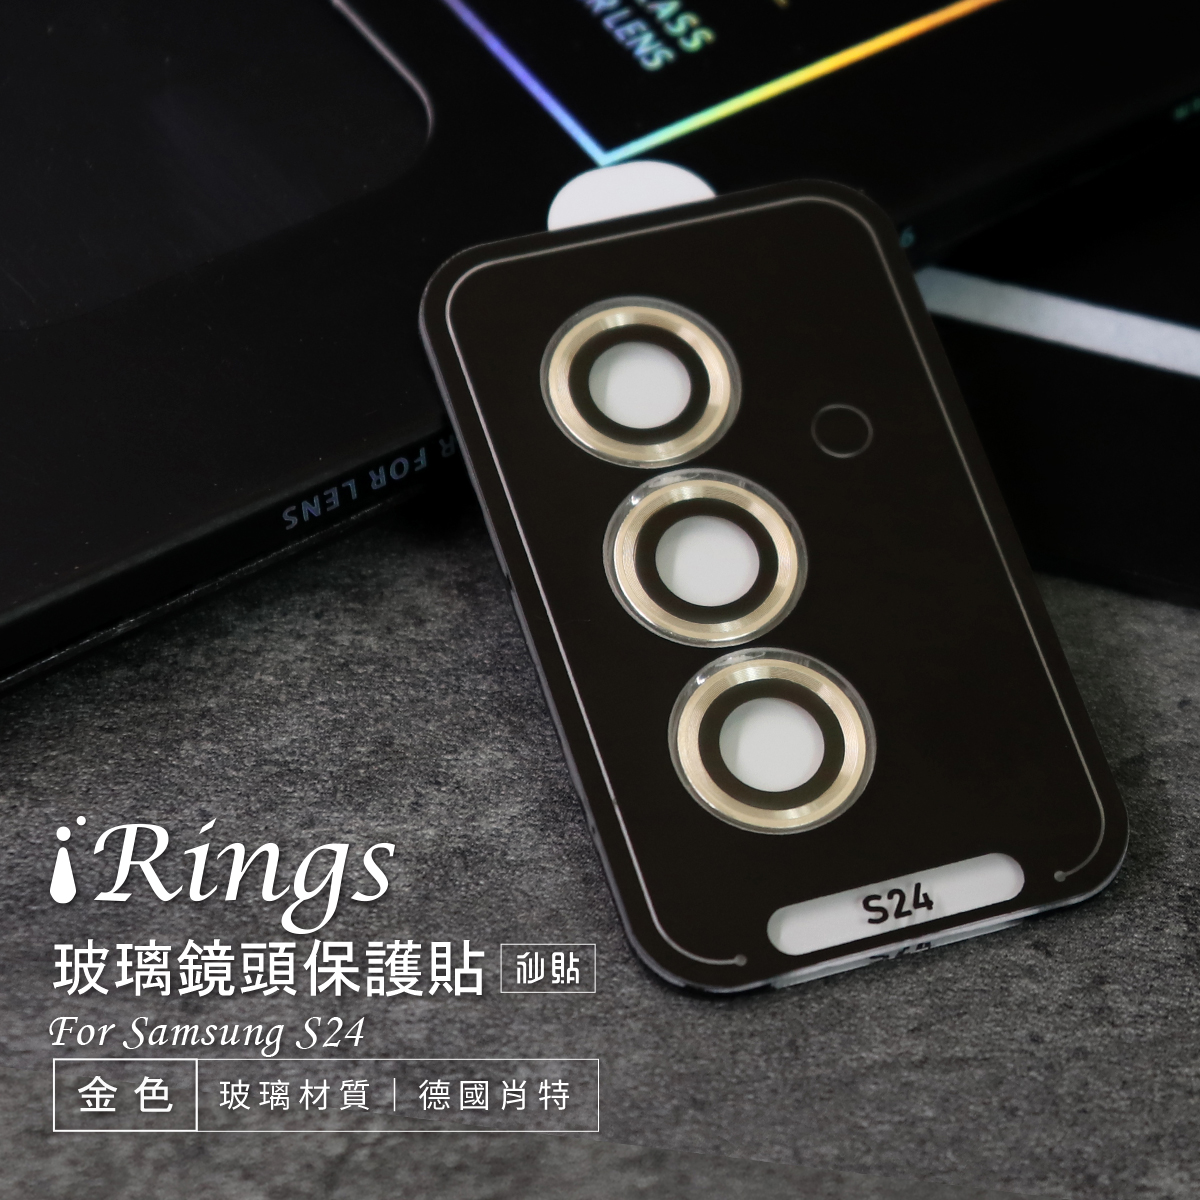 【iRings】玻璃鏡頭保護貼-5顆 FOR SAMSUNG S24 (金)